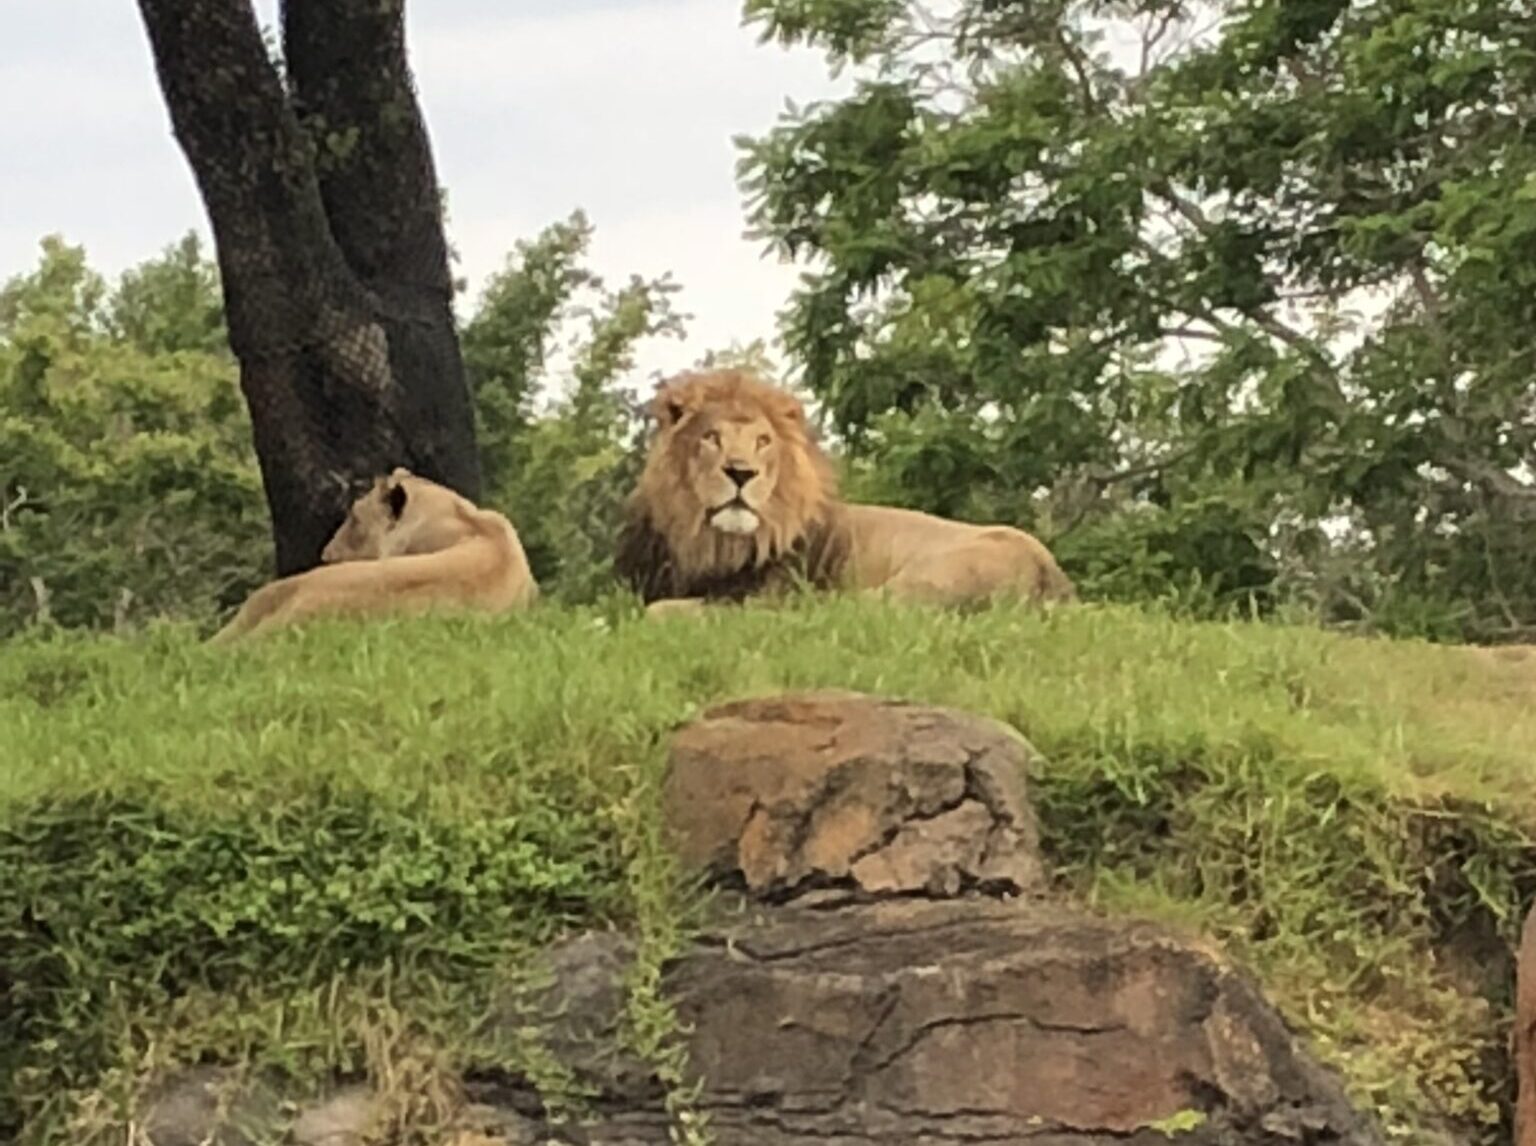 Lions on the savannah, Kilimanjaro Safari, Disney's Animal Kingdom park